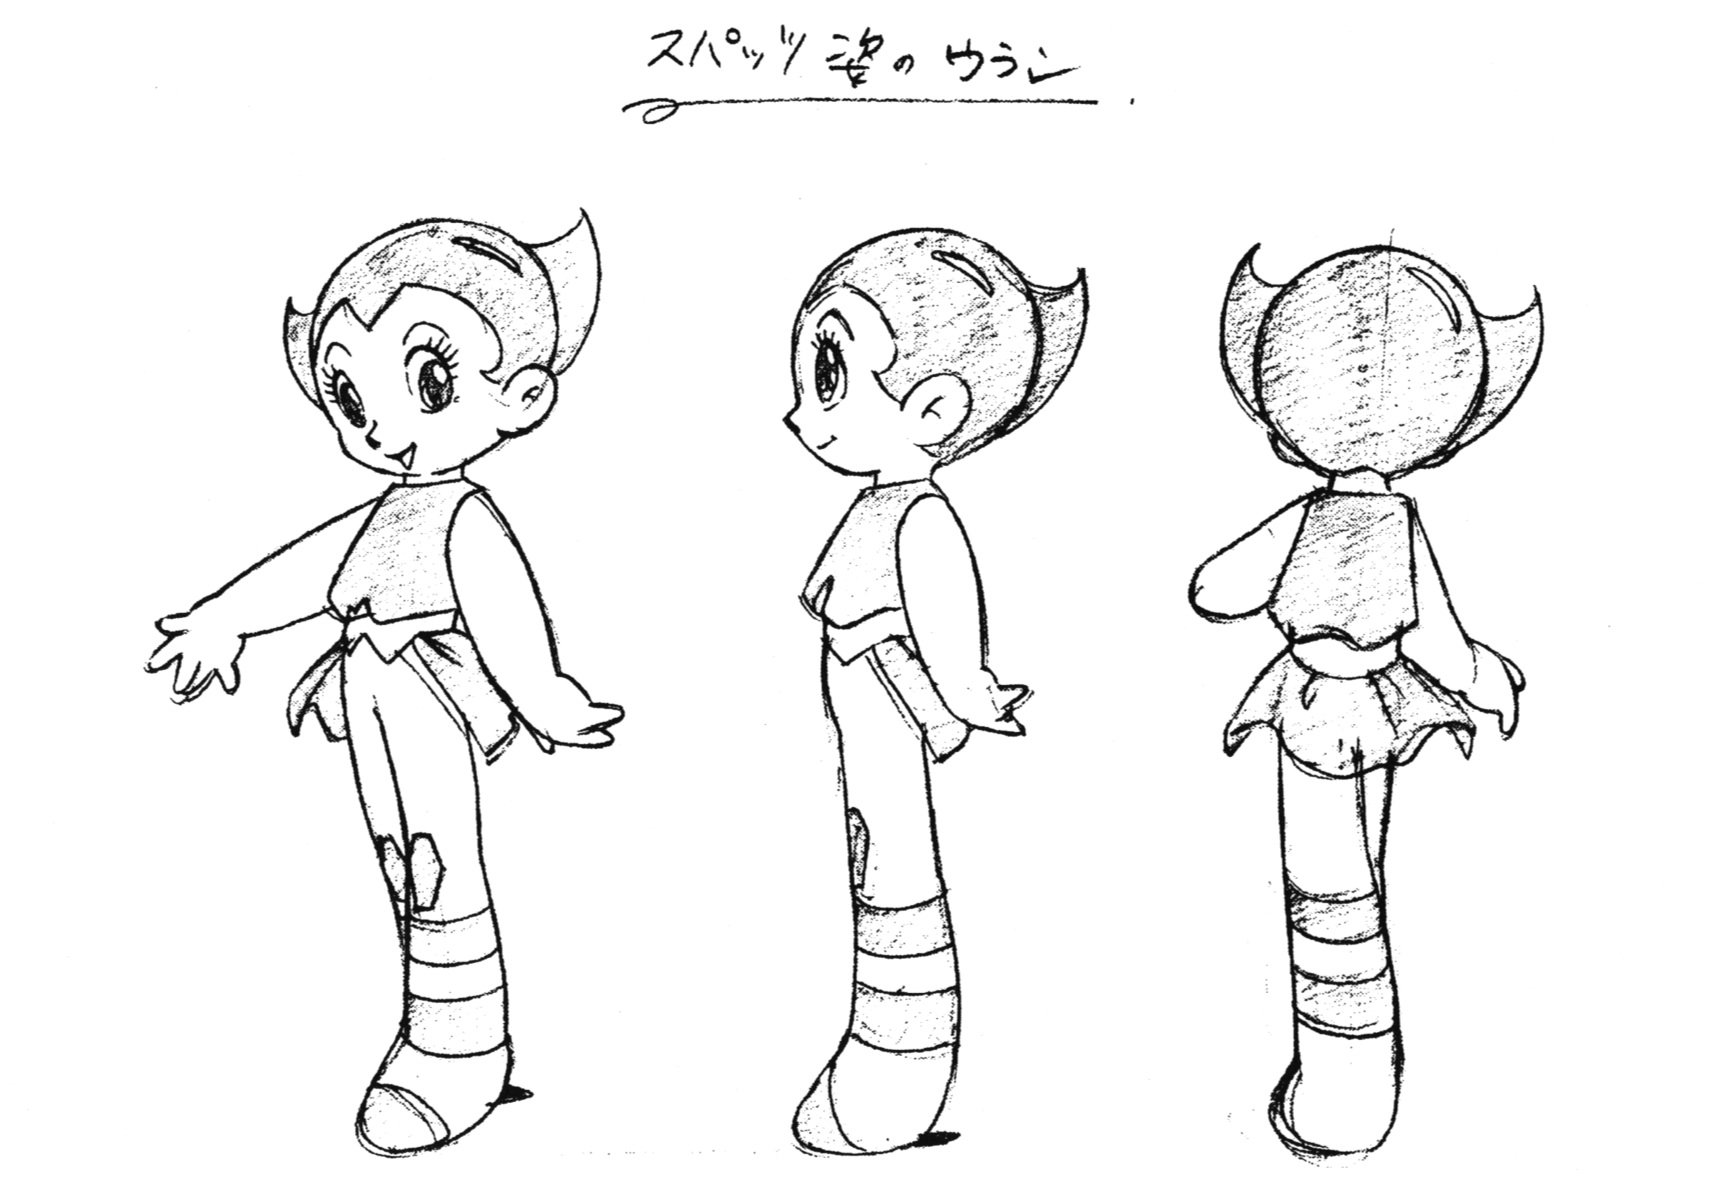 Art of Astro Boy